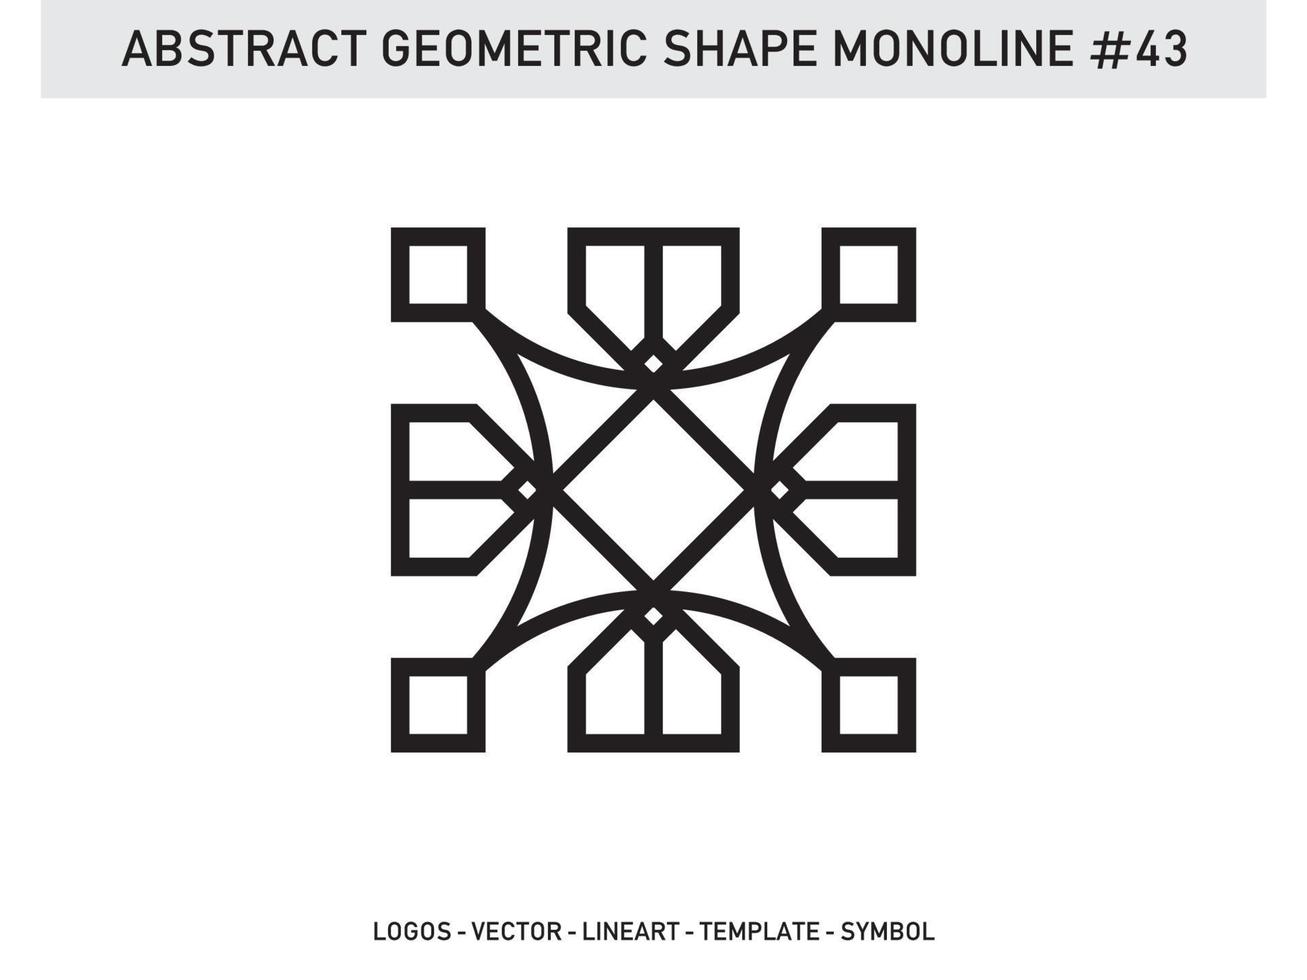 vector de forma monoline geométrica abstracta moderna gratis